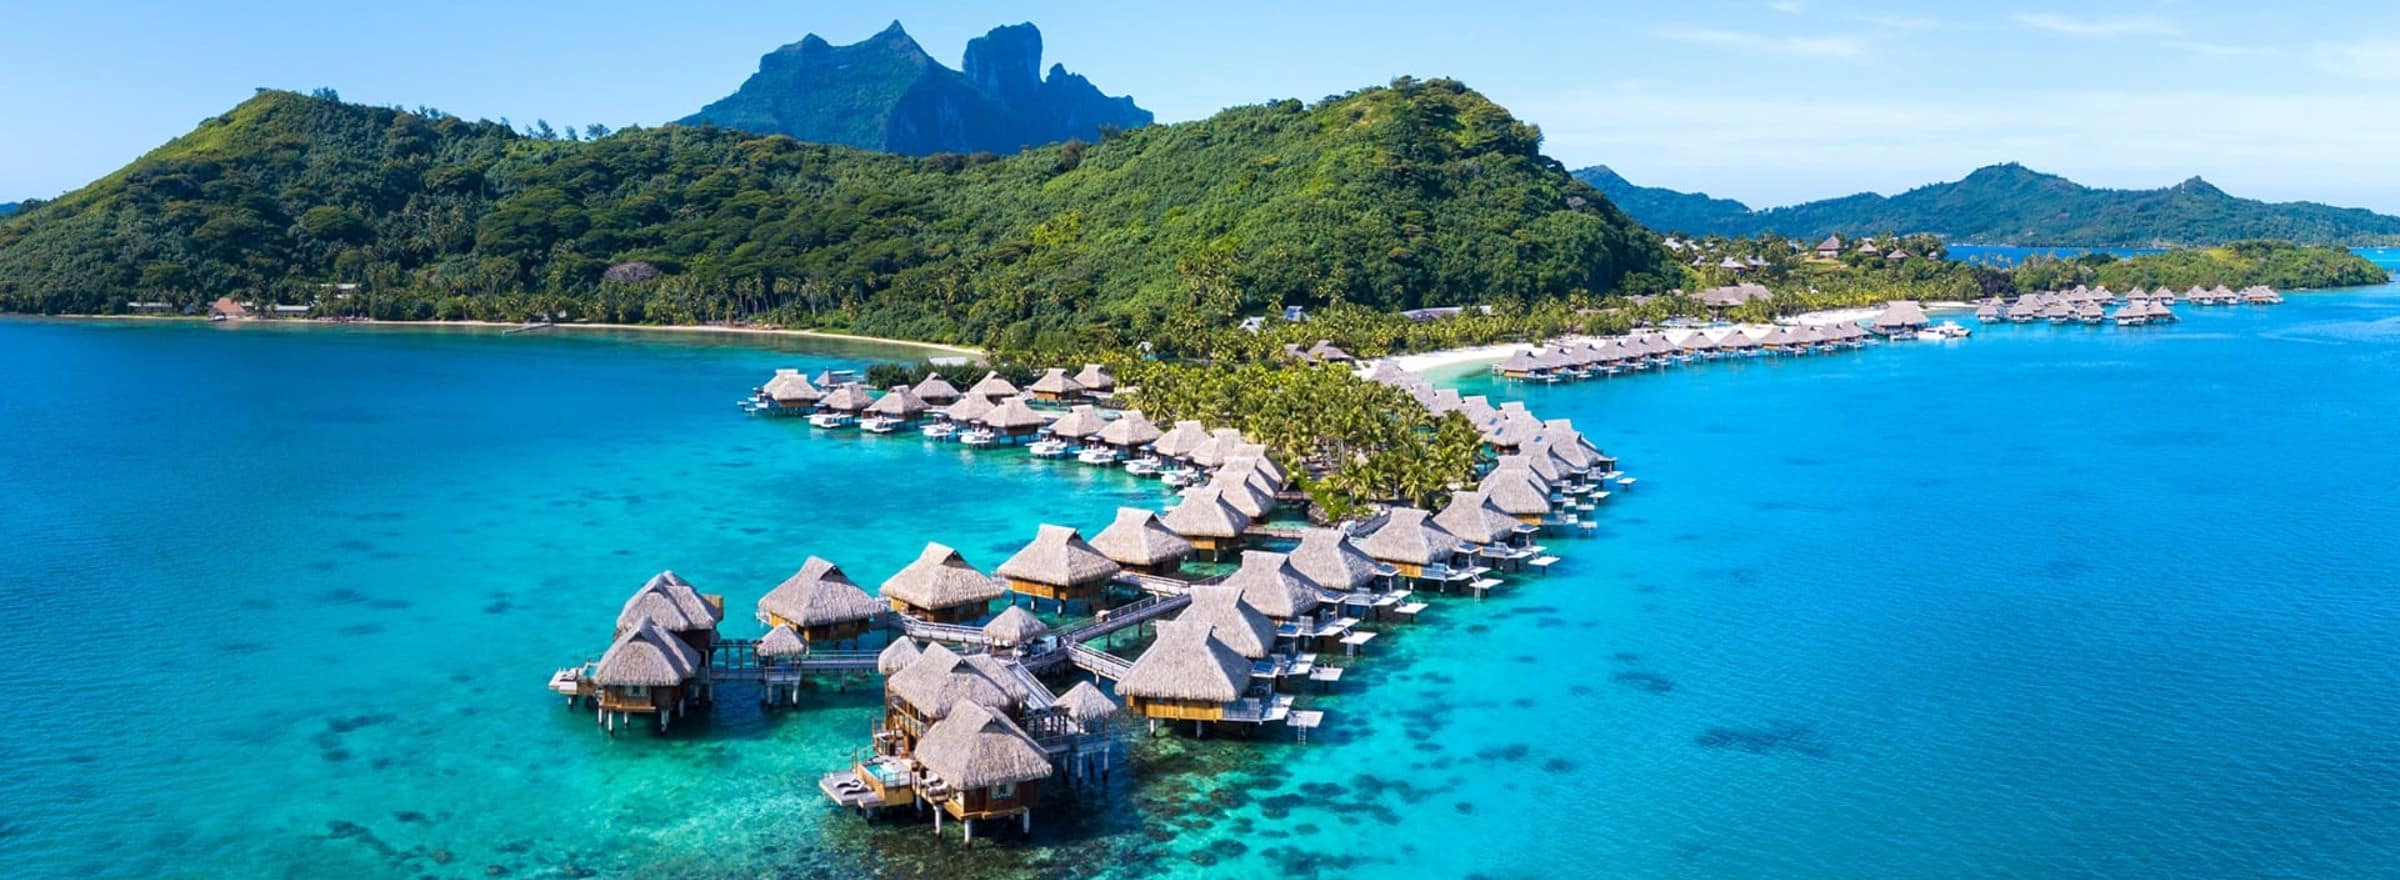 Bora Bora Holiday Packages Checklist Spacifica Travel